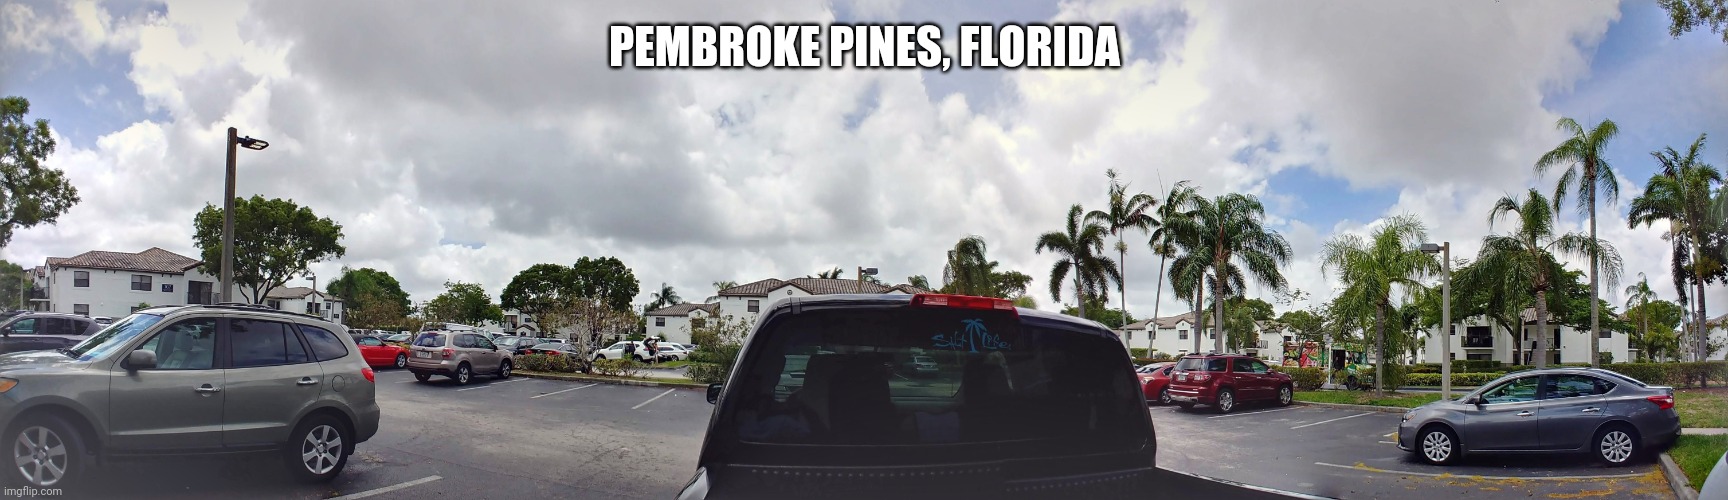 Pembroke Pines Florida Imgflip - pembroke pines roblox cars